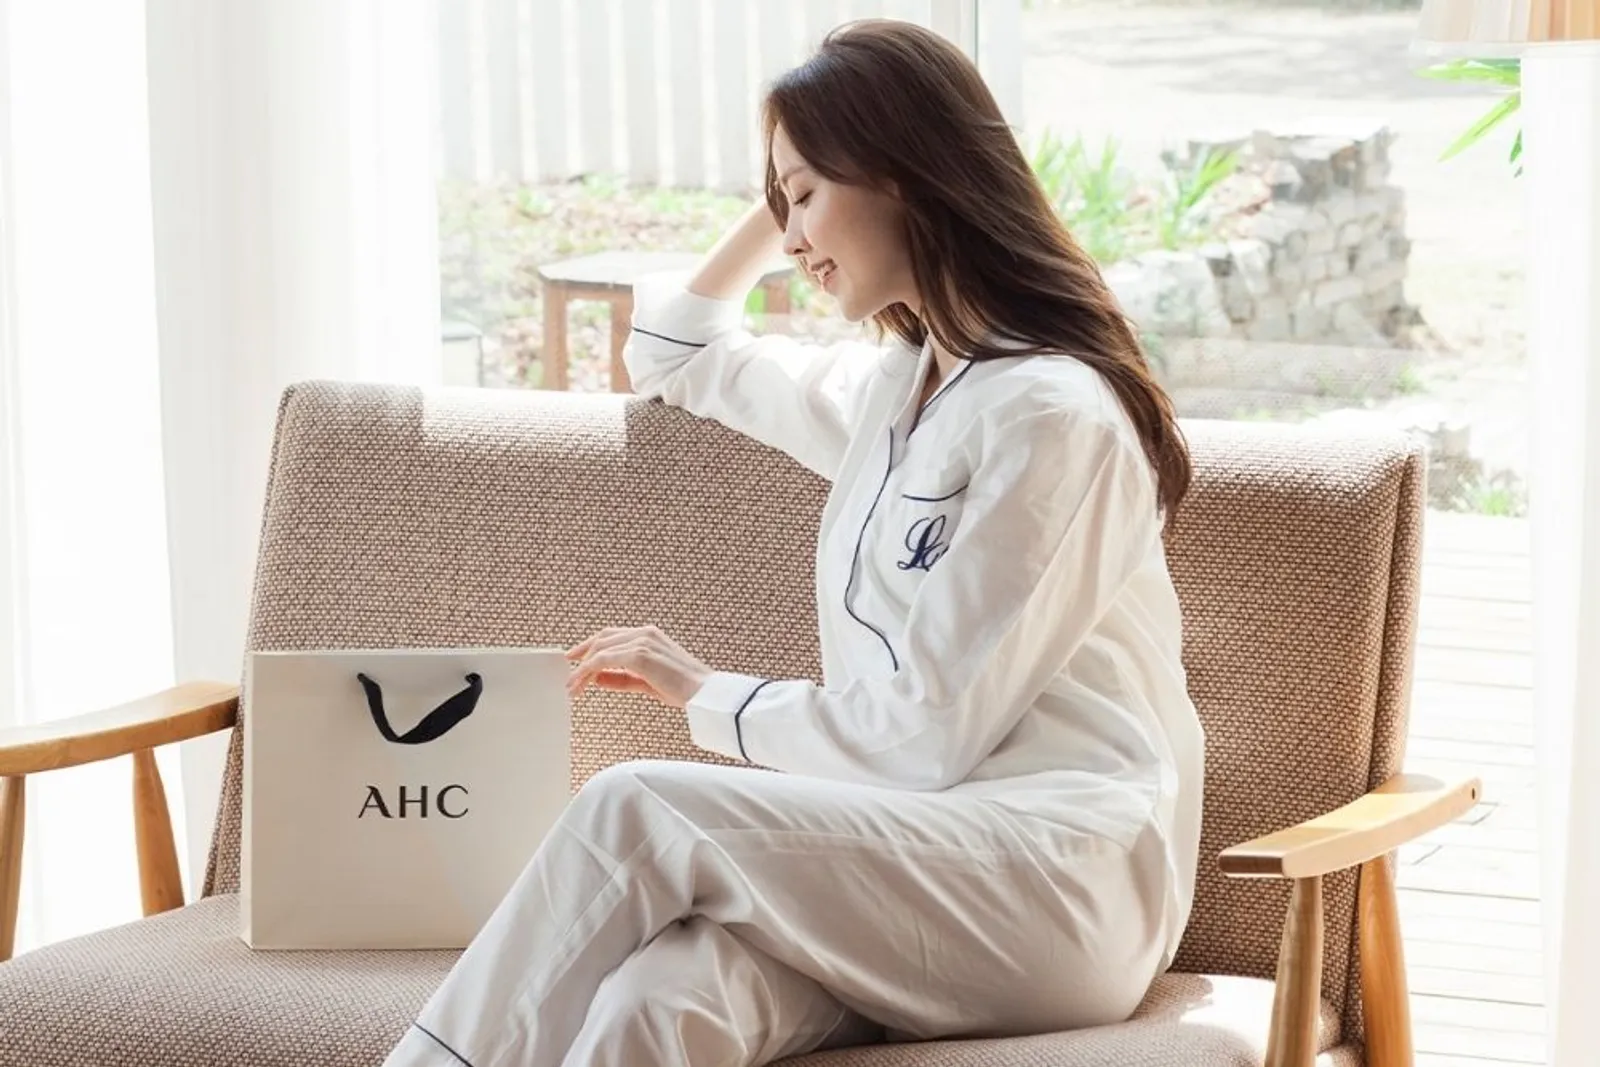 AHC Mengajak Perempuan untuk Melakukan Perawatan yang Menyenangkan